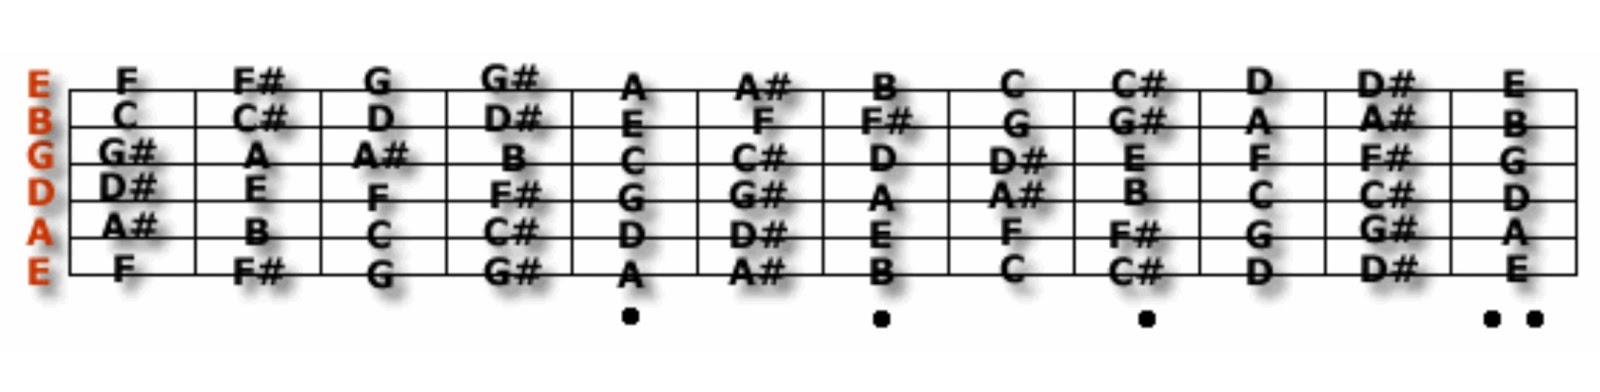 4 струна гитары нота. Расположение нот на грифе бас гитары 4 струны. Ноты на бас гитаре 4 струны. Ноты на грифе бас гитары 6 струн. Расположение нот на грифе бас гитары.